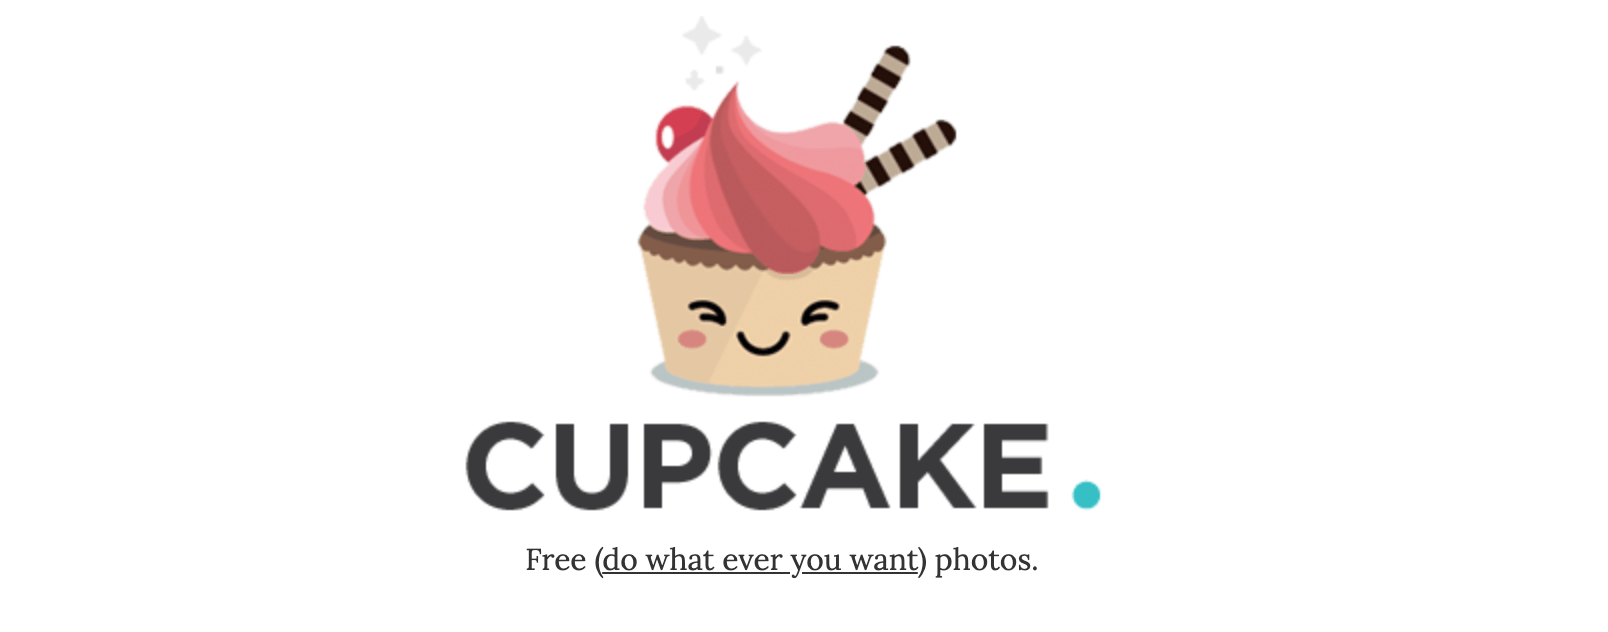 Cupcake per immagini gratis